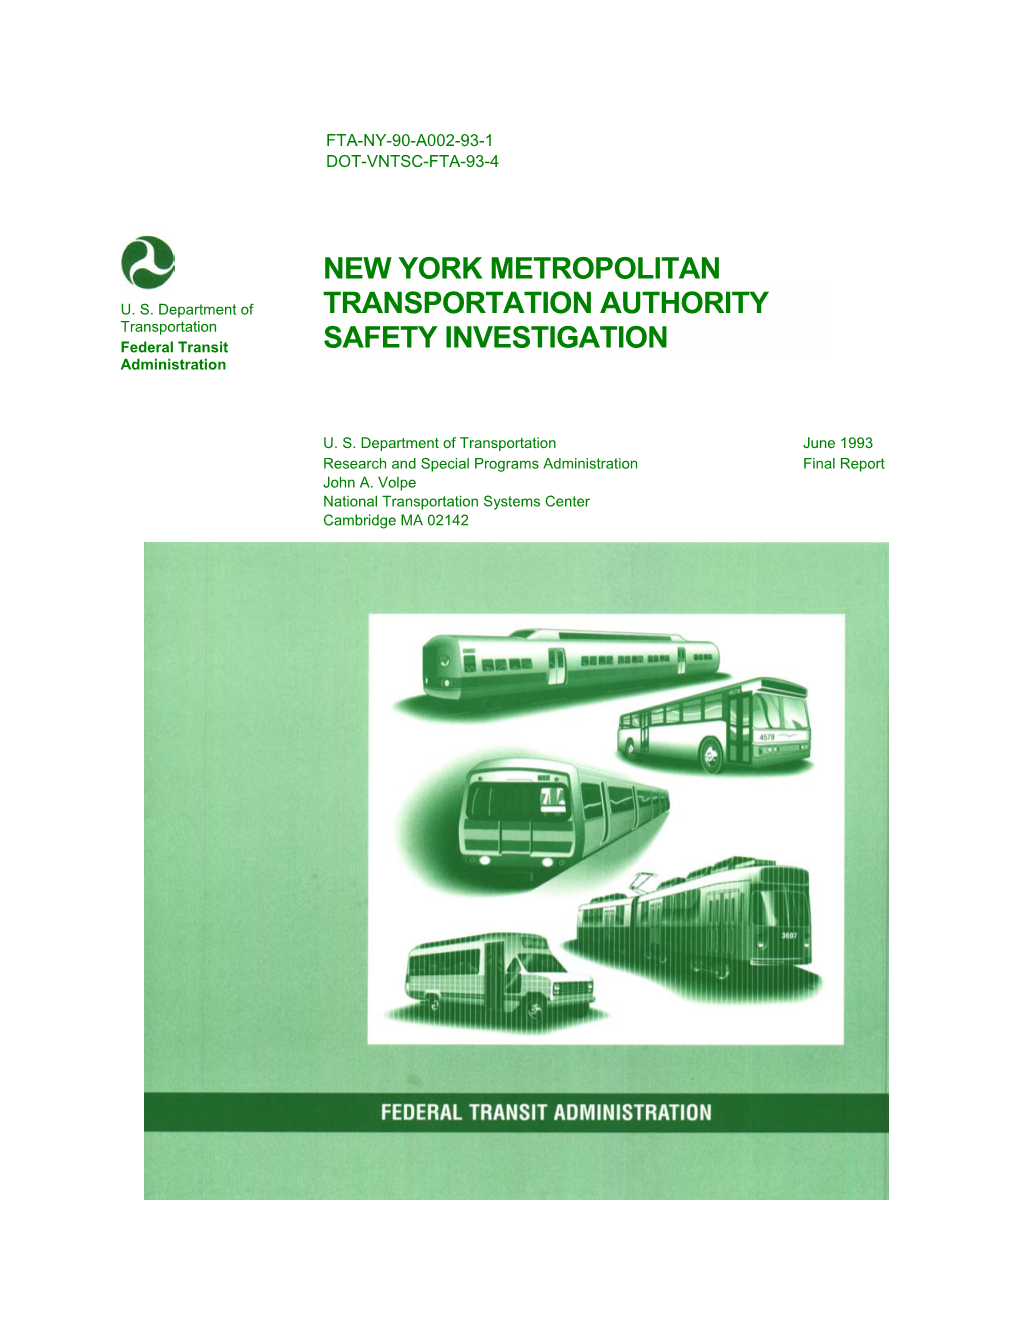 New York Metropolitan Tranportation Authority Safety Investigation June